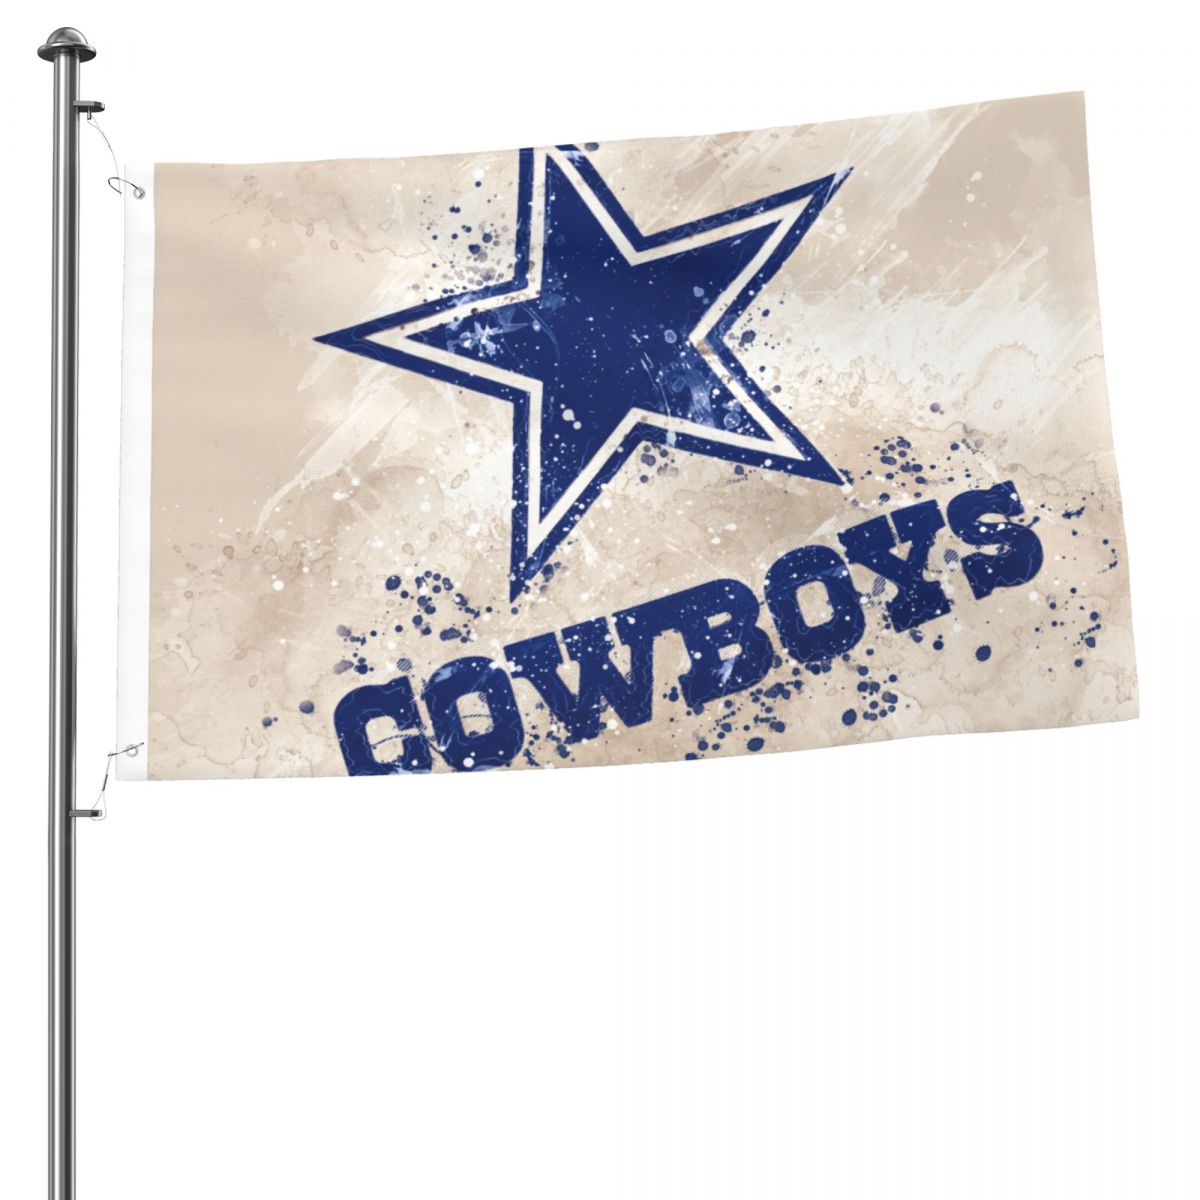 Dallas Cowboys Logo Grunge Art 2x3FT Flag